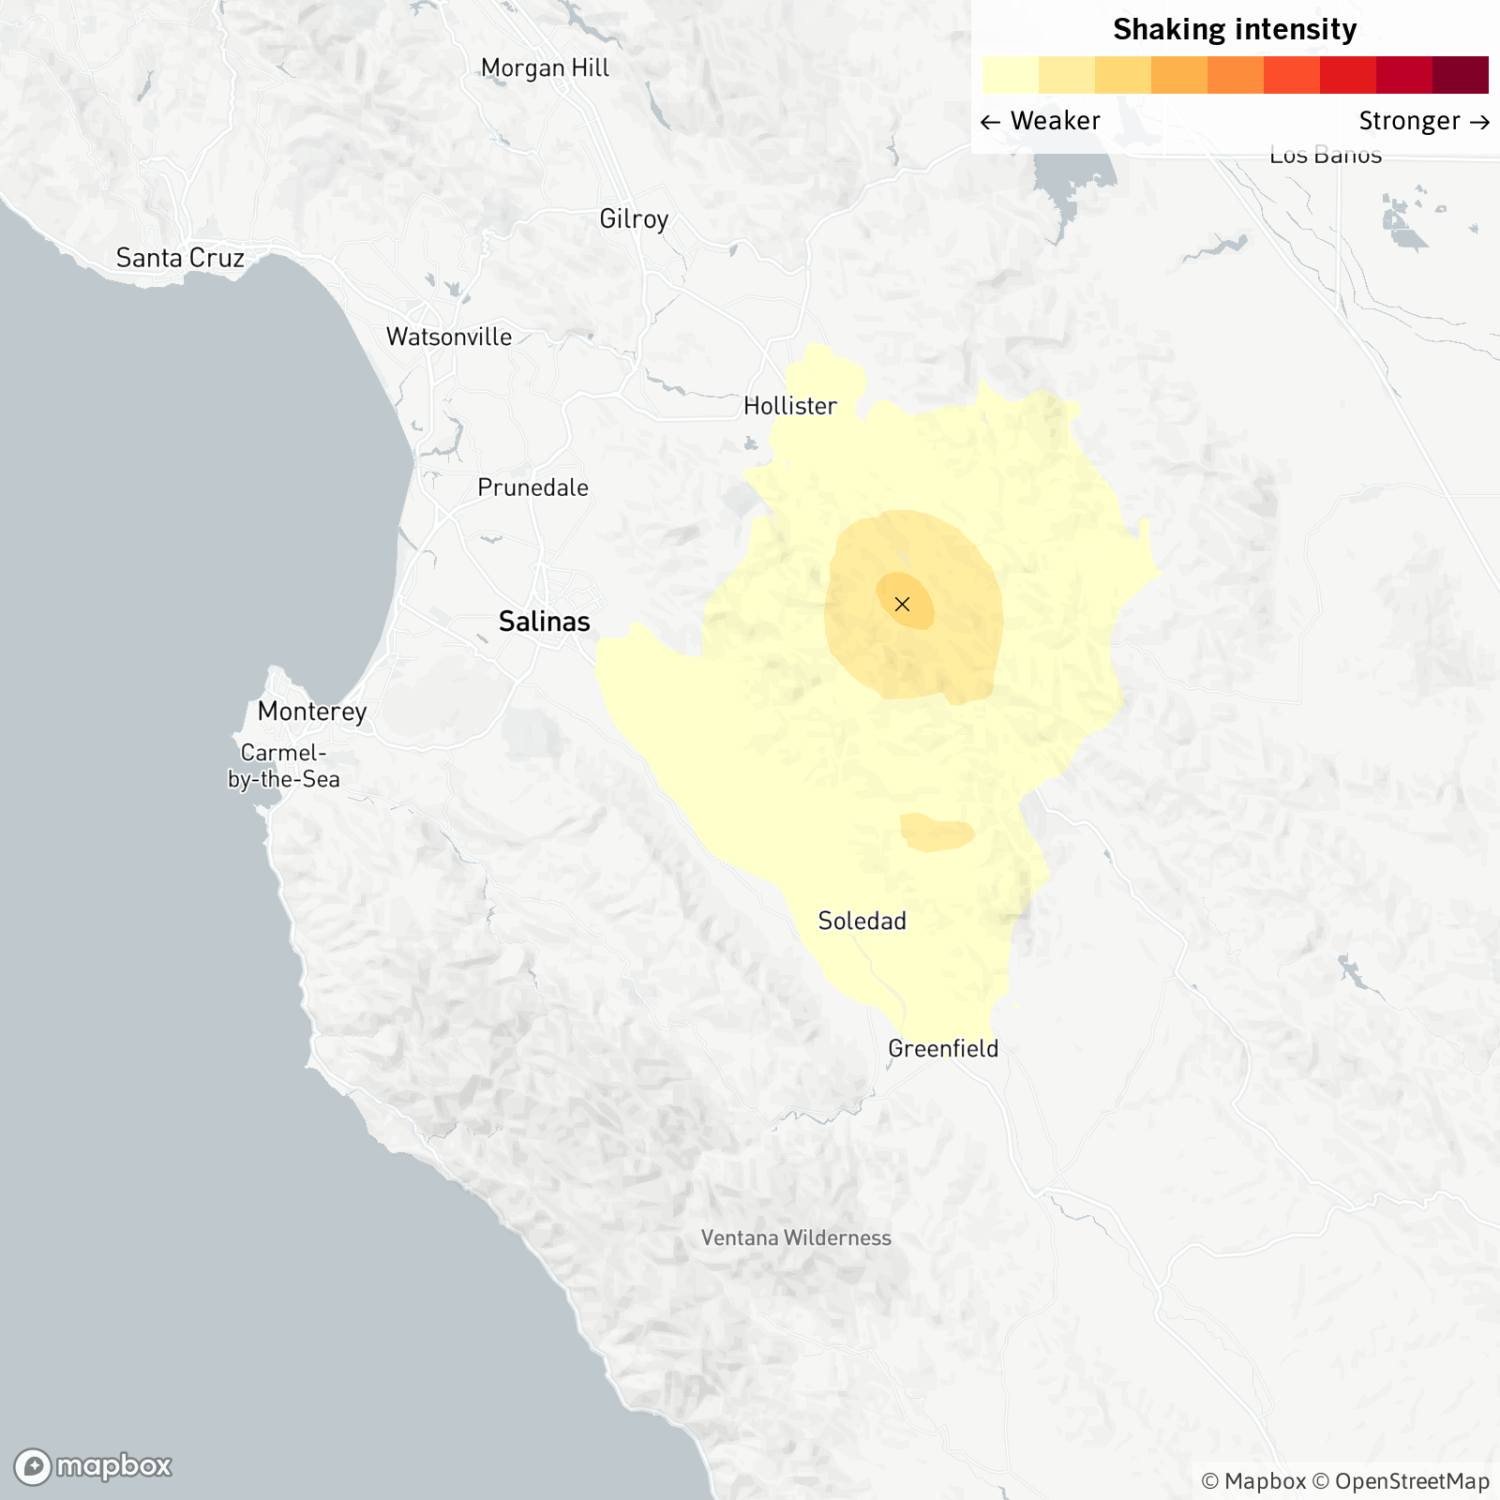 Magnitude 4.0 earthquake hits near Hollister, Calif.